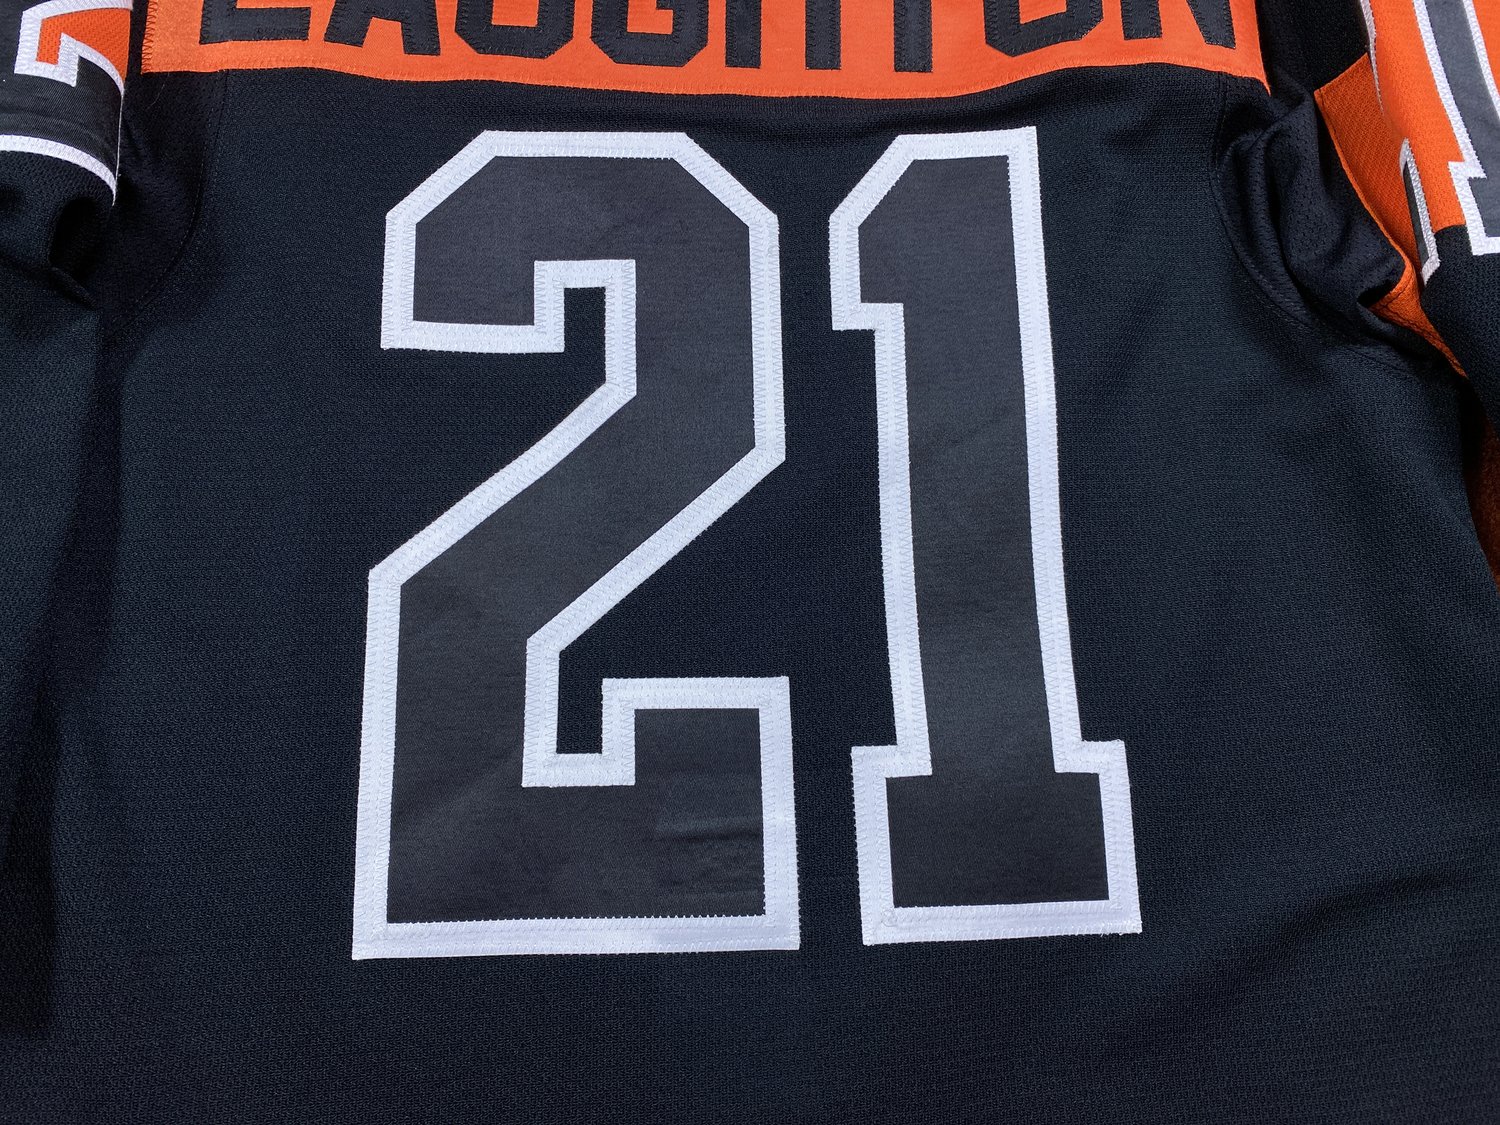 Scott Laughton Philadelphia Flyers Game Worn 2019-20 Set 2 Third Jersey —  Liberty Bell Jerseys